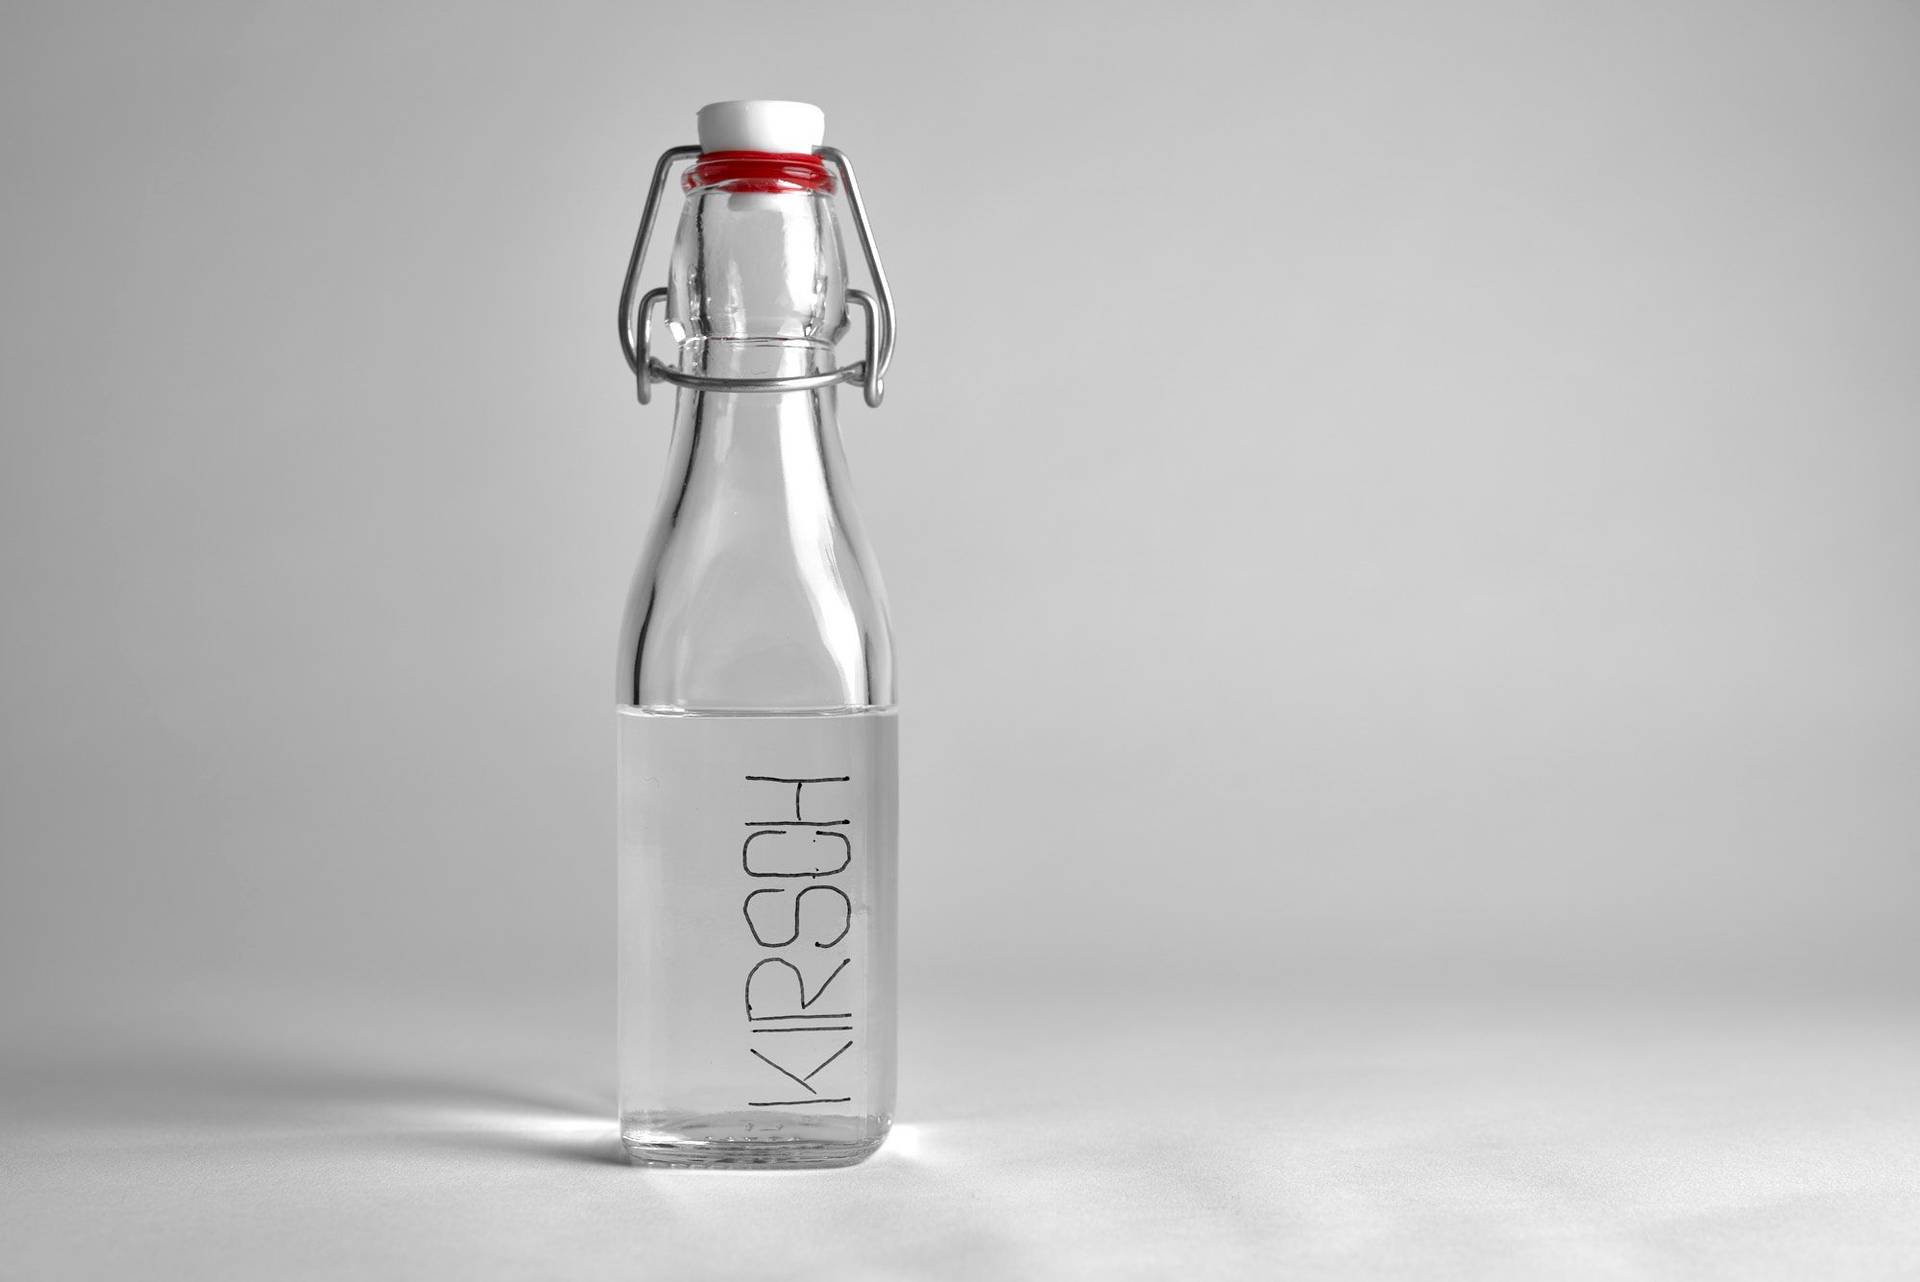 a glass bottle of kirsch liquor on white background